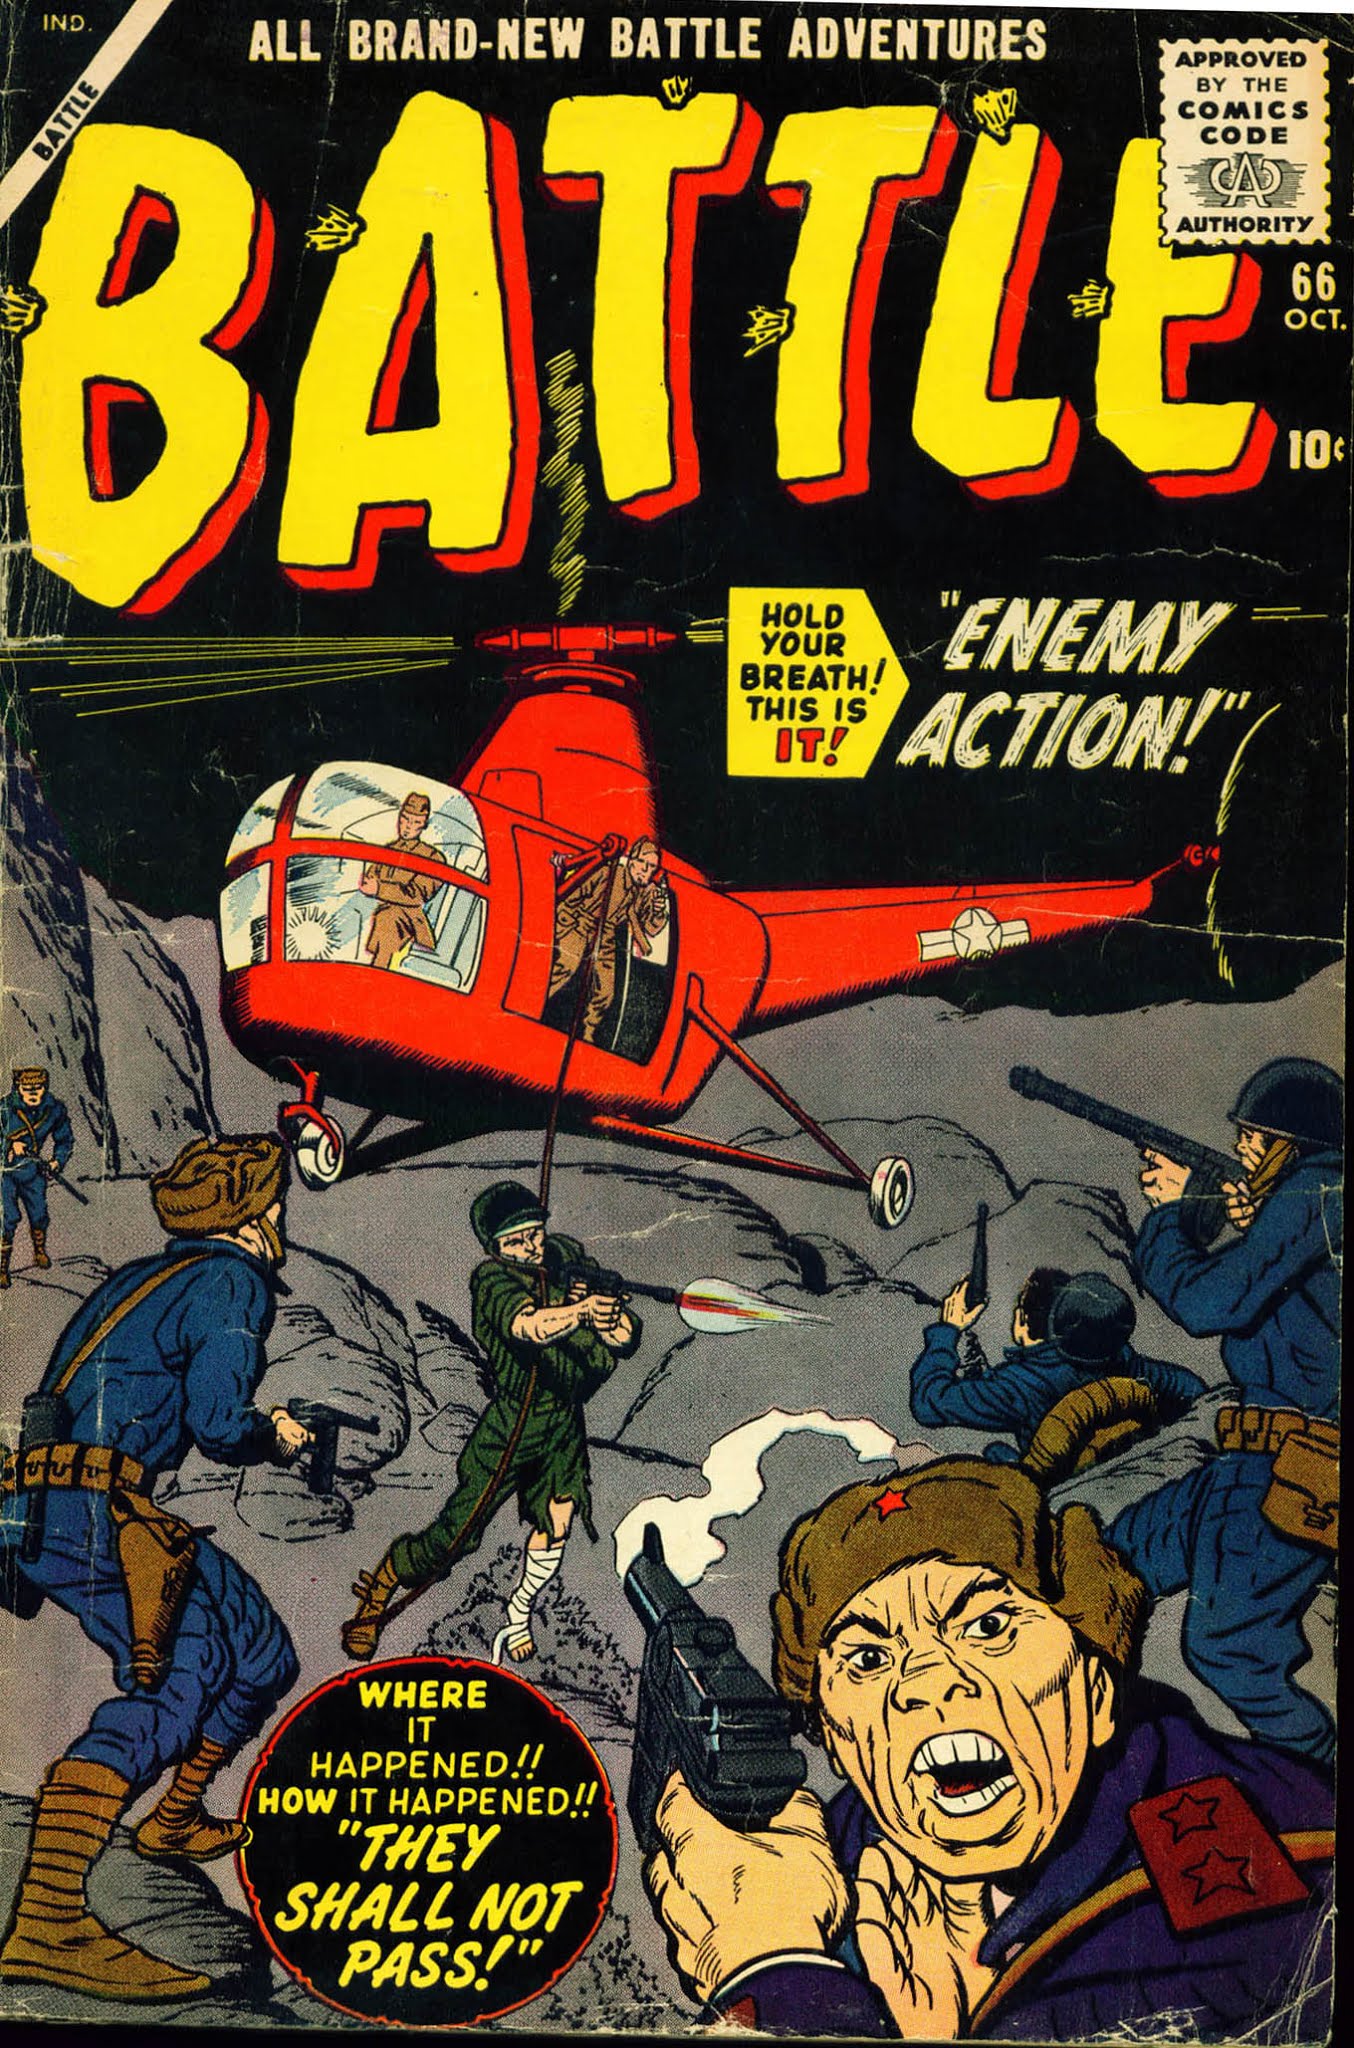 Read online Battle comic -  Issue #66 - 1